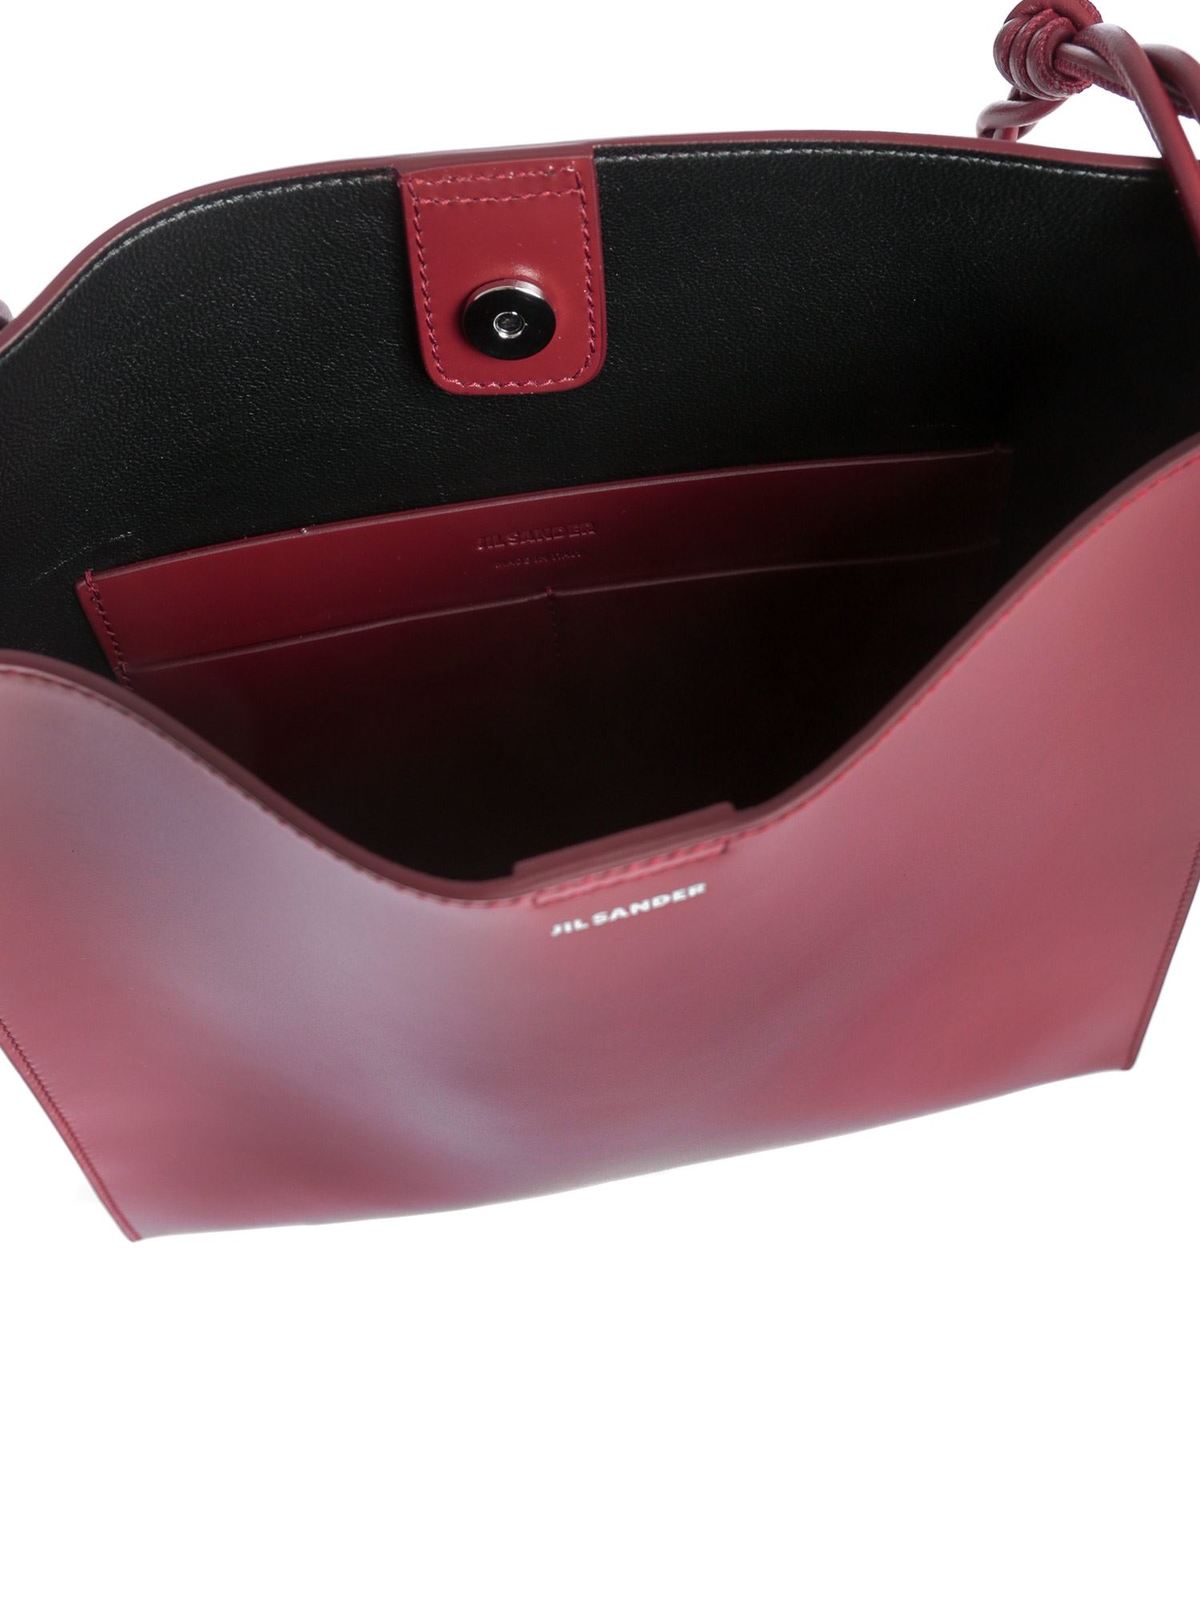 Shoulder bags Jil Sander - Tangle medium bag in burgundy